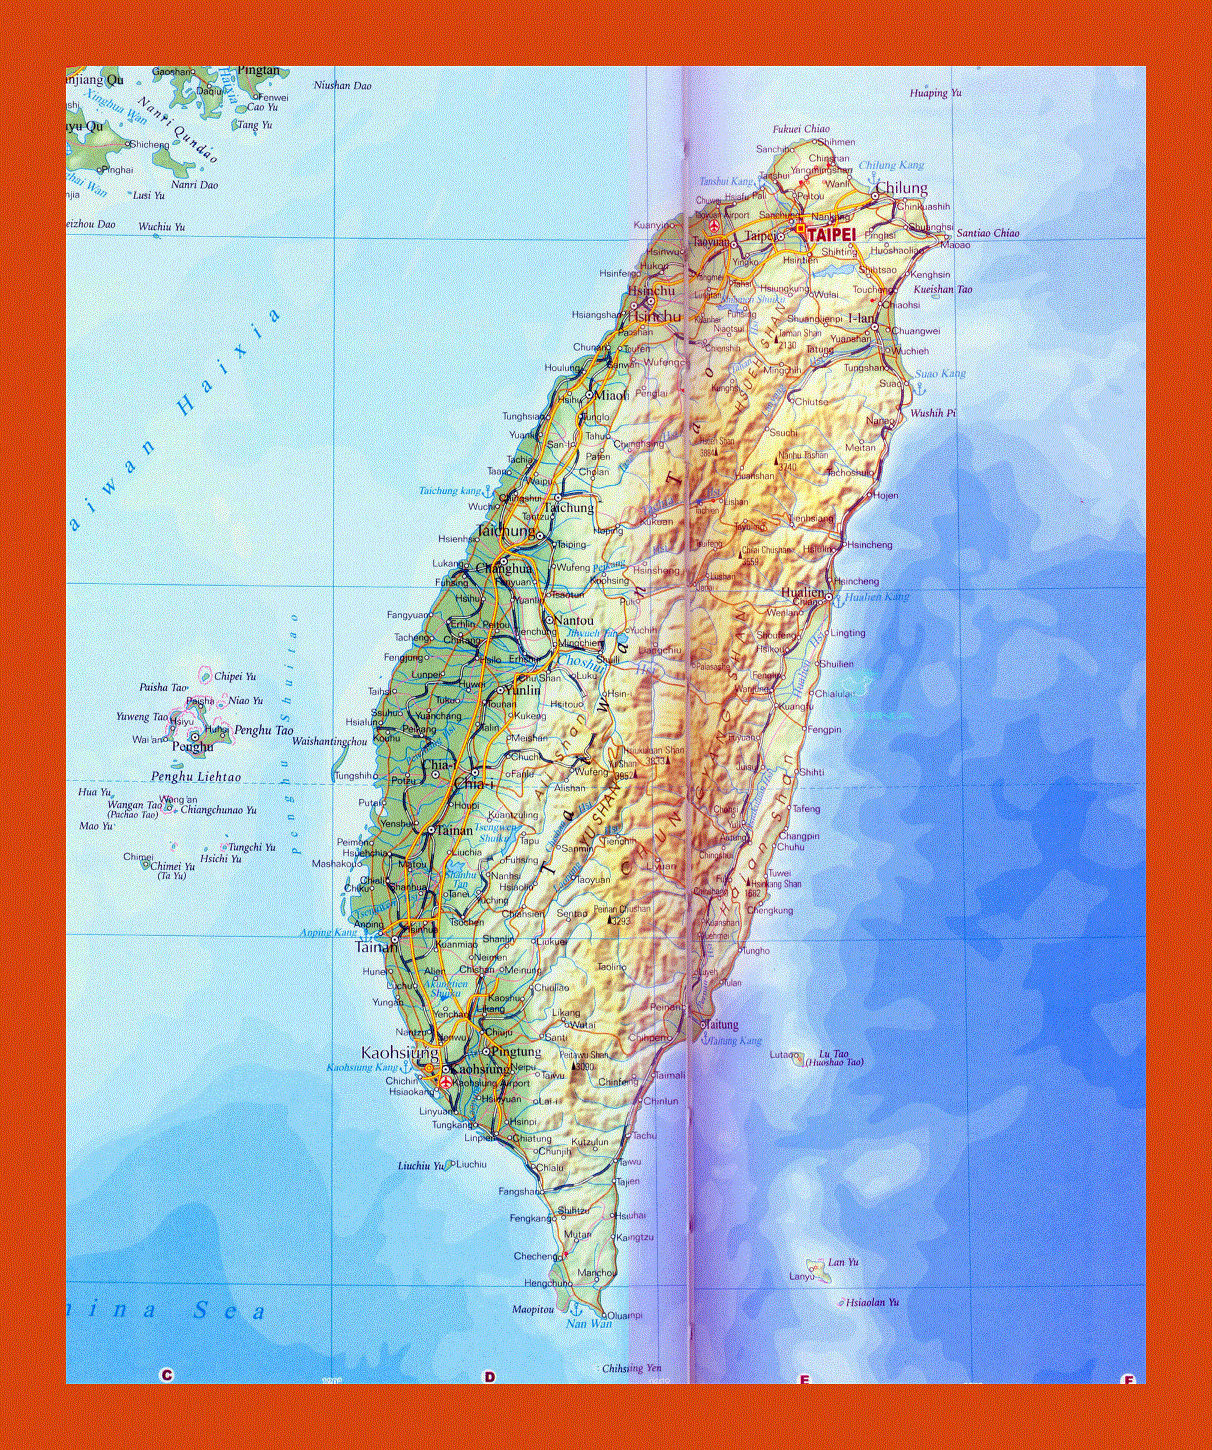 Road map of Taiwan